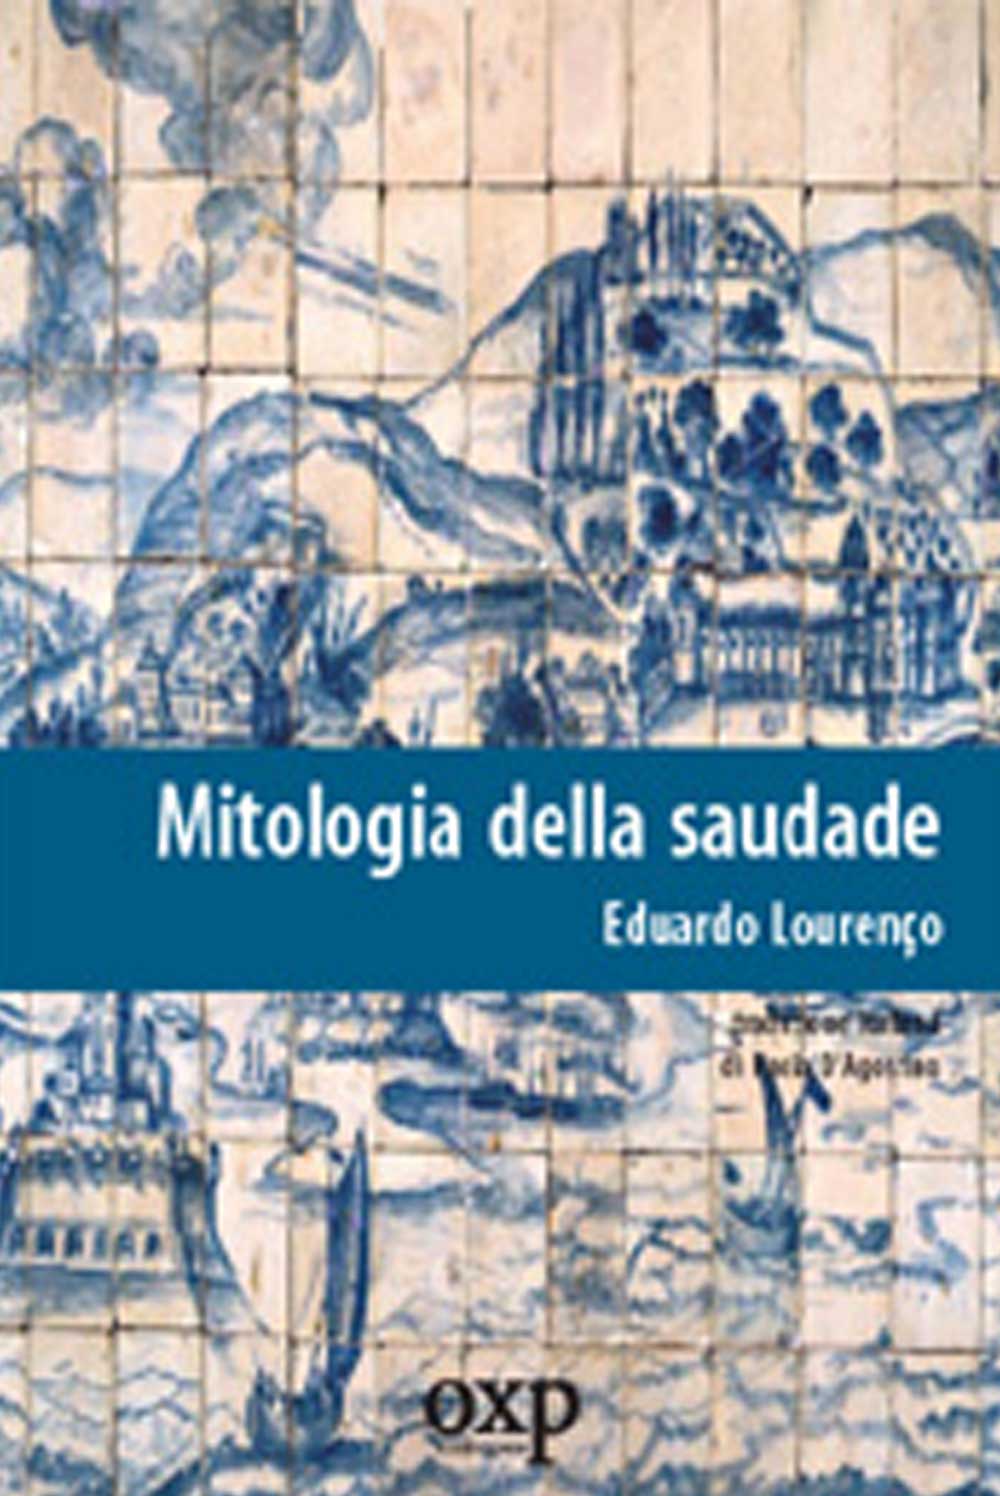 Mitologia della saudade, di Eduardo Lourenço (Gli Ibischi, 2006)